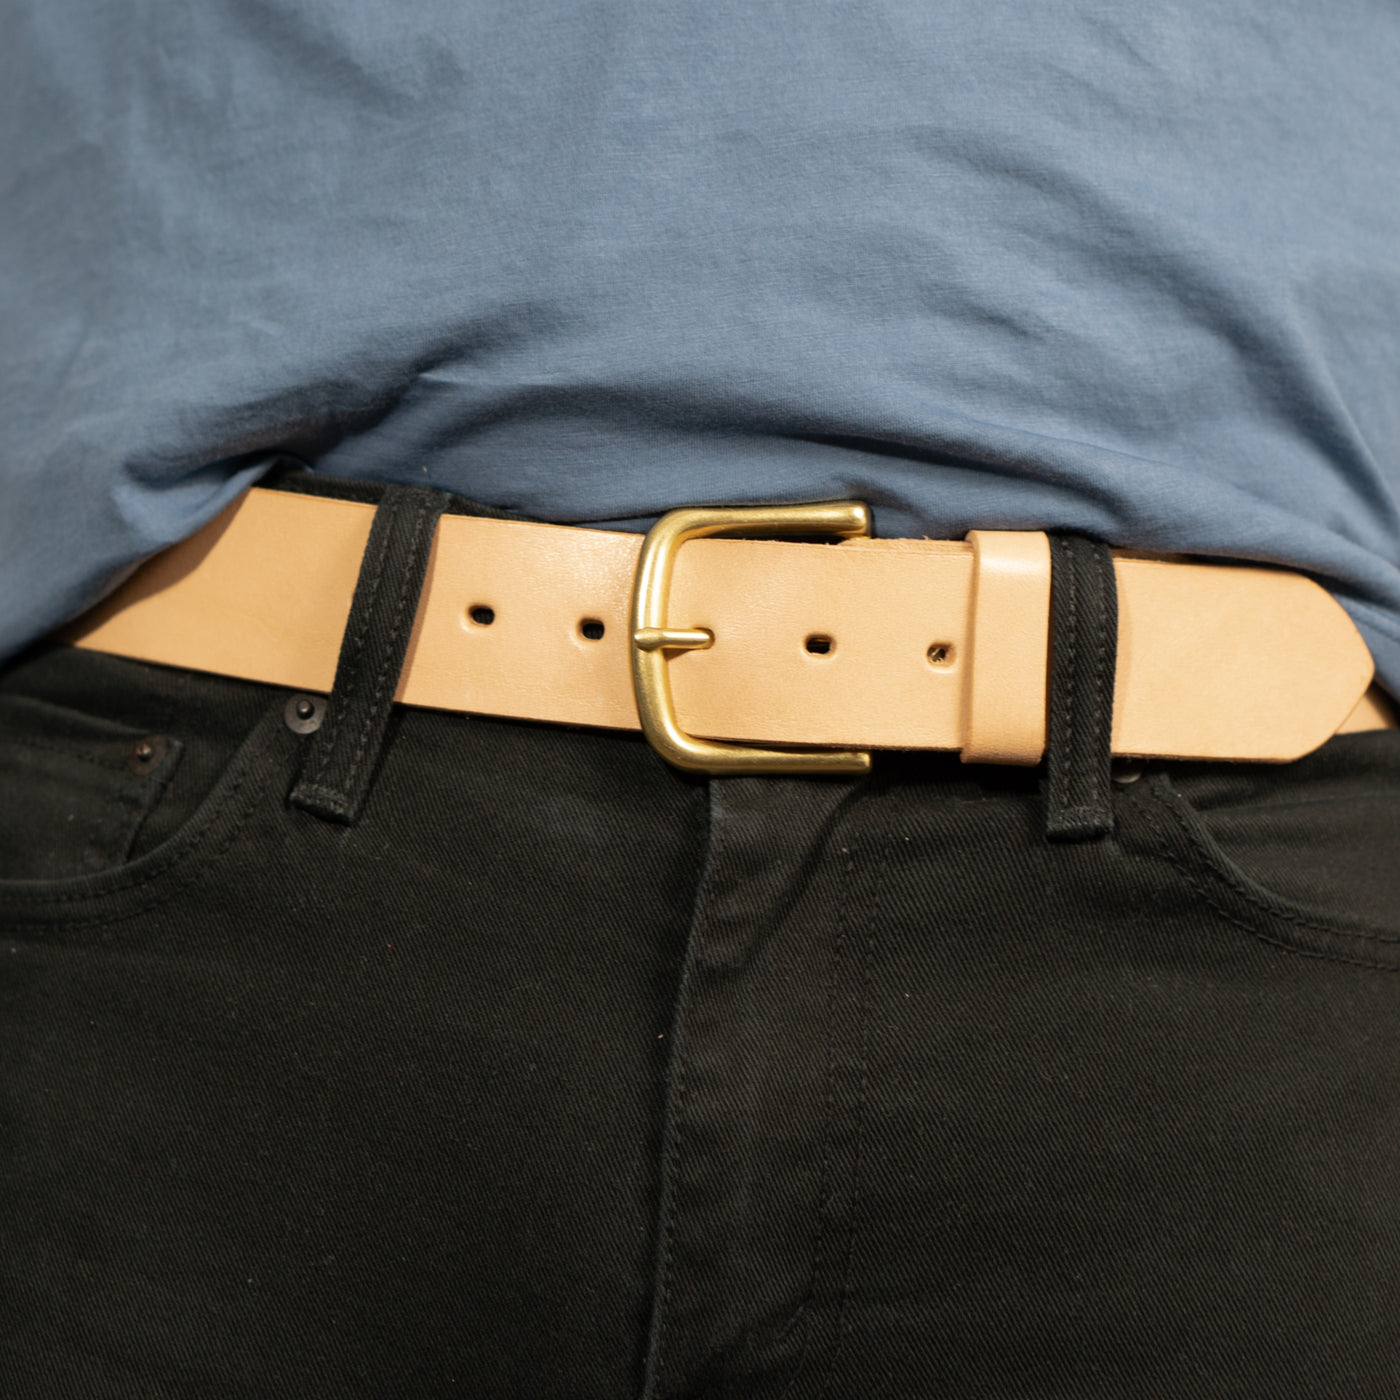 The 1.5" Belt